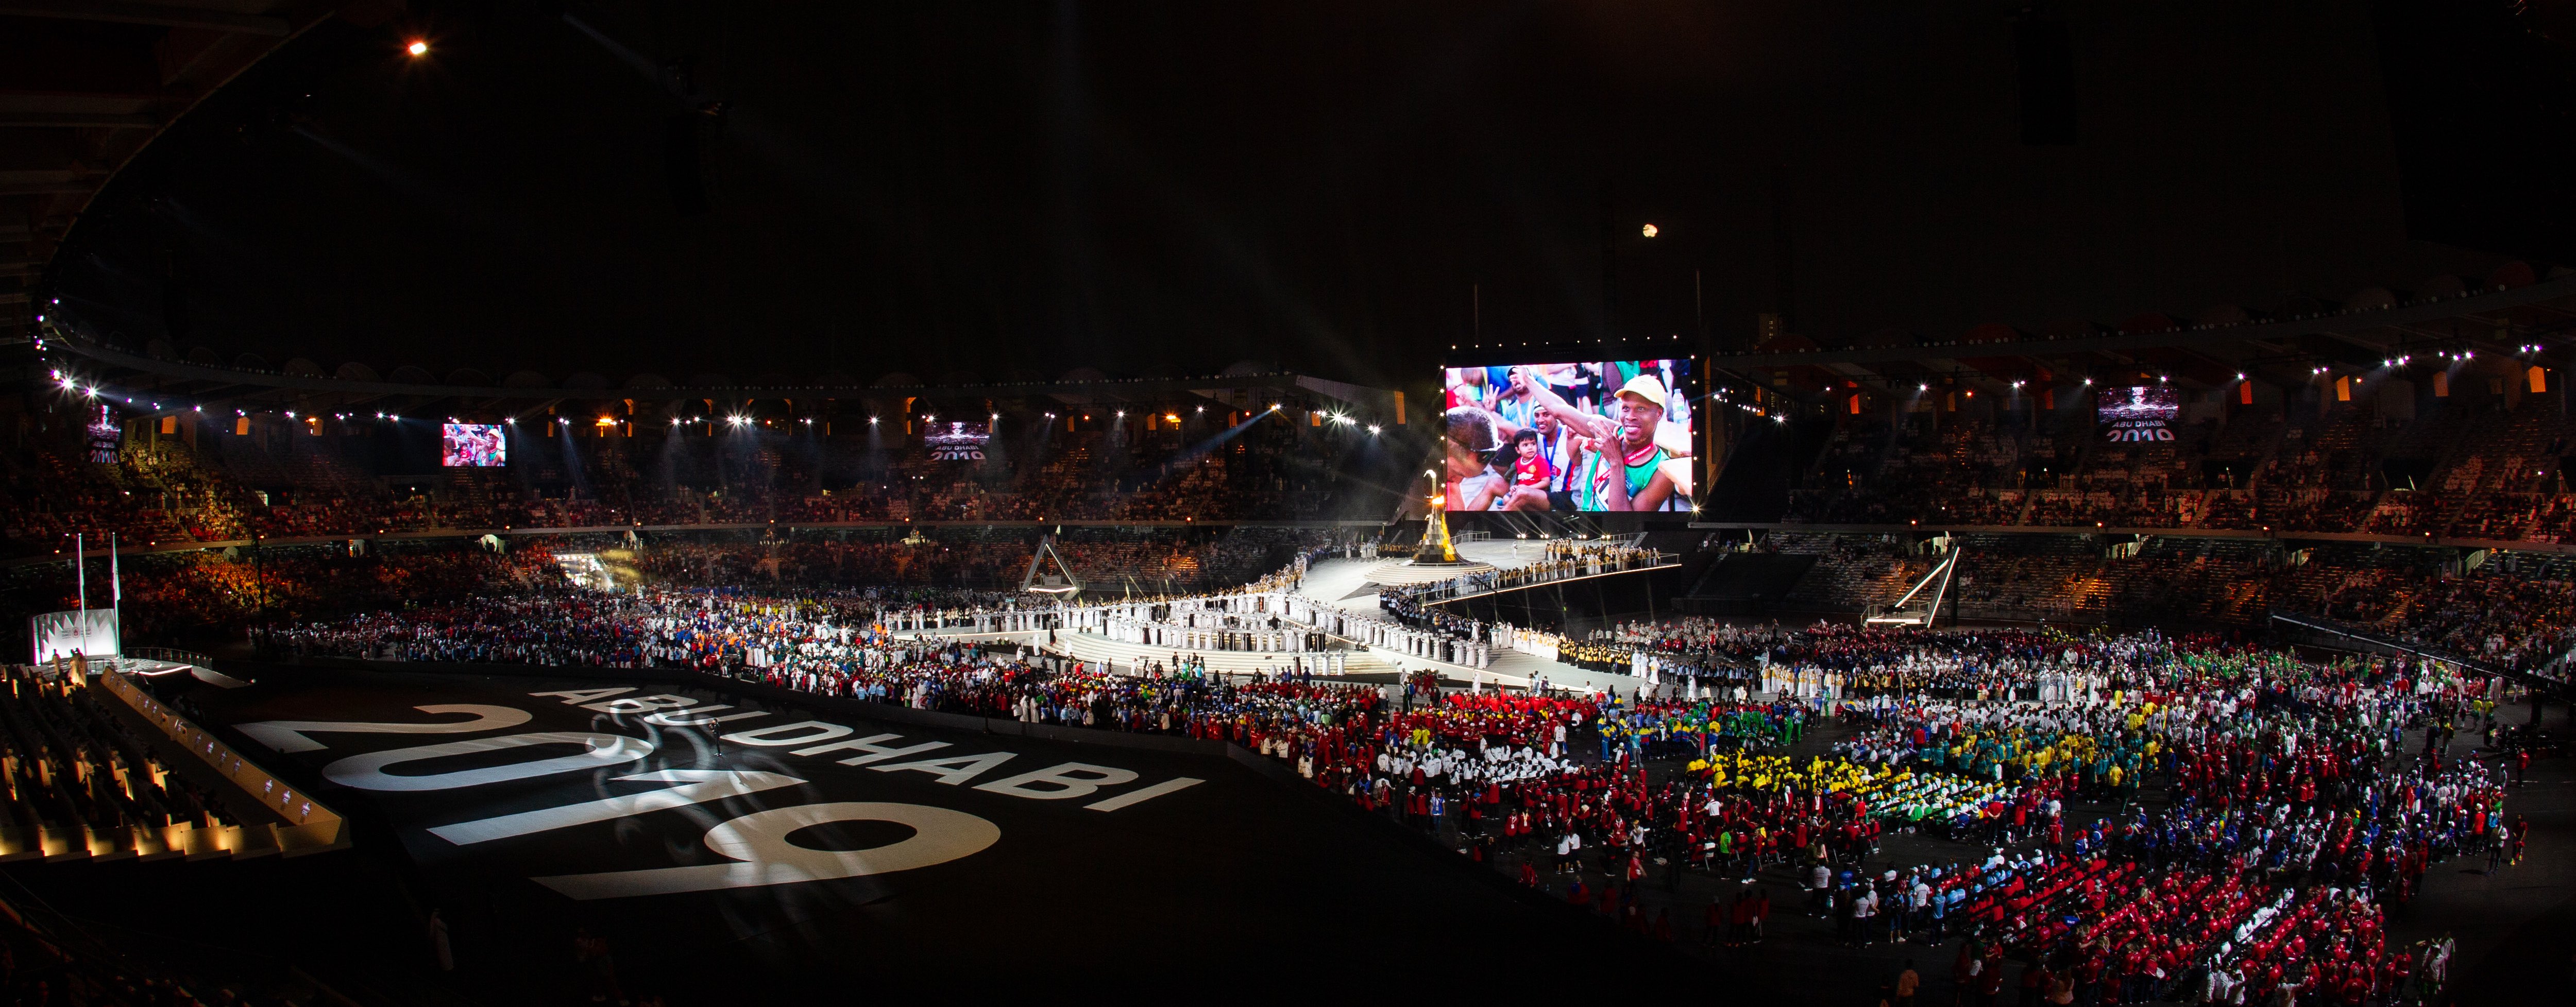 Special Olympics closing ceremony